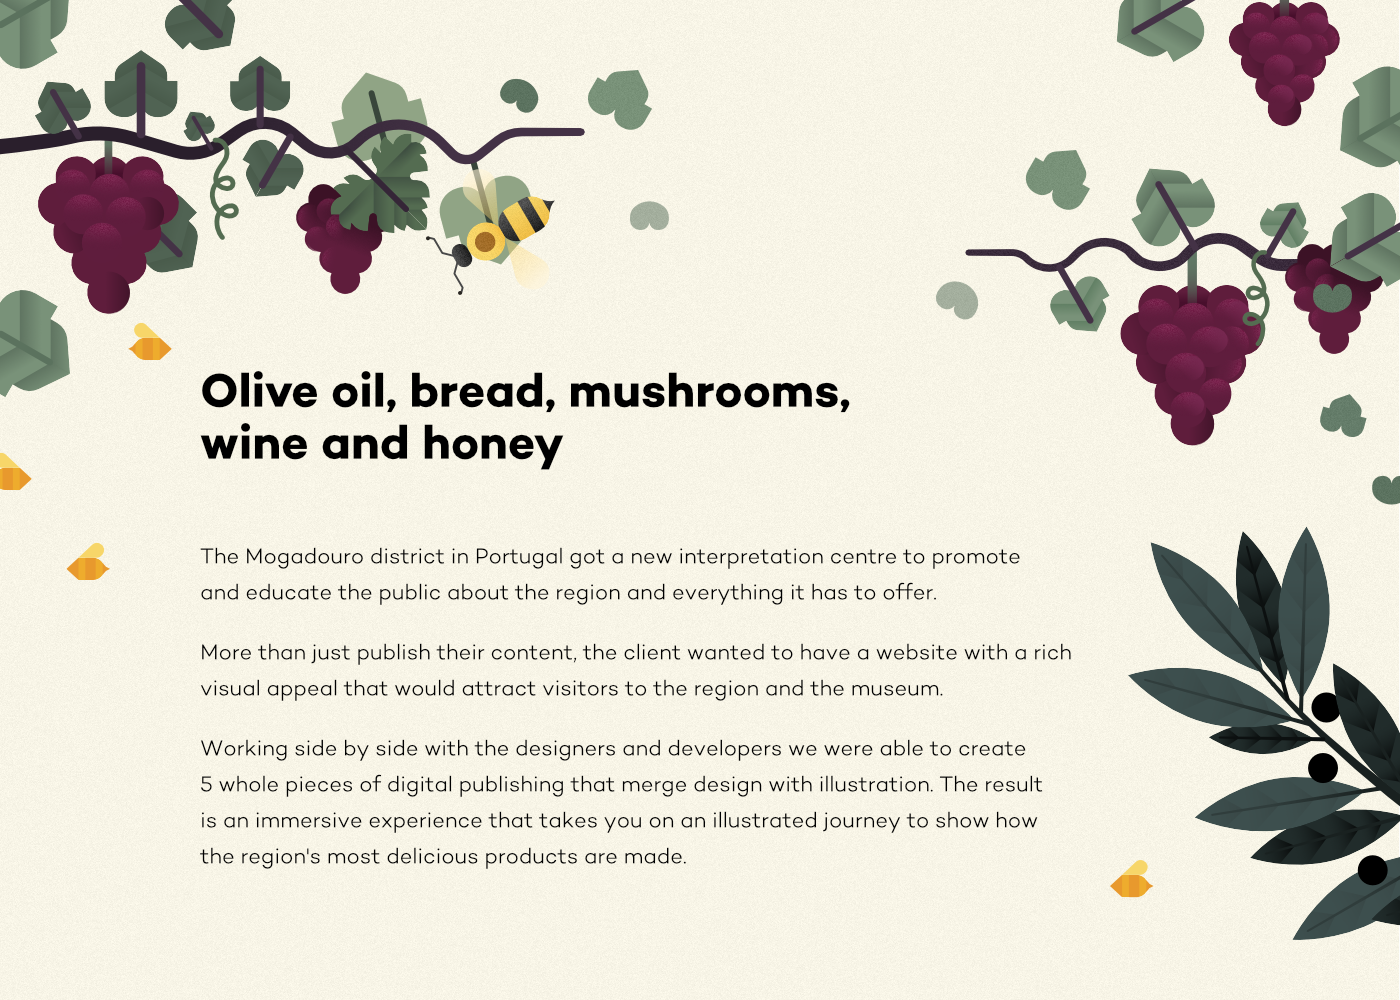 bread honey Mushrooms olives Olive Oil trees agriculture rural wine grapes vine harvesting Nature Flowers bees